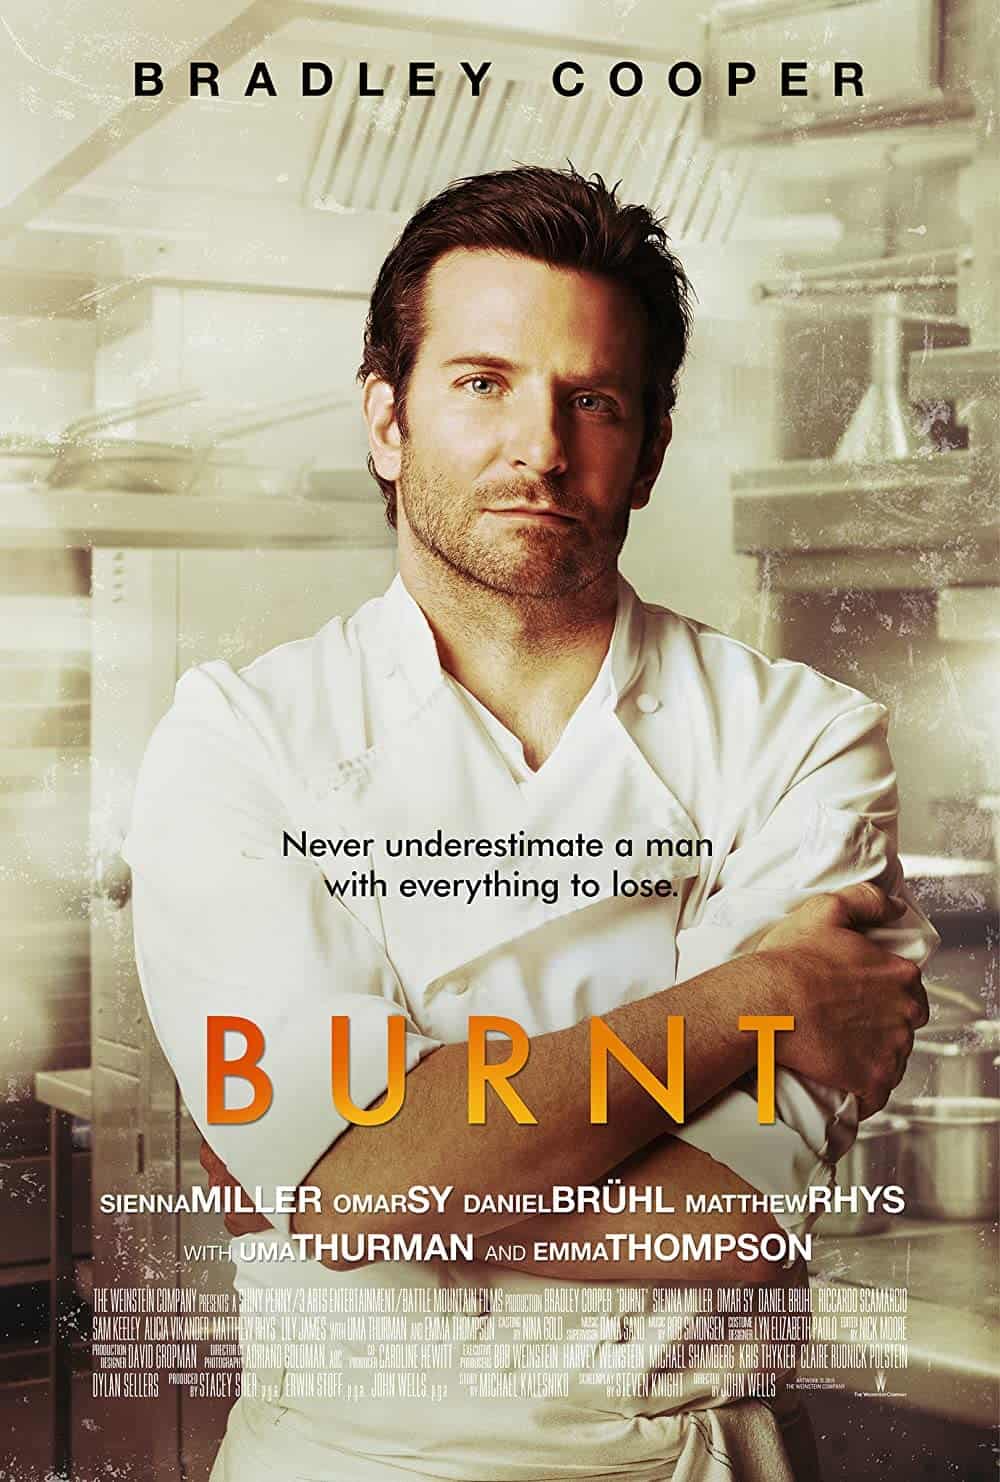 Burnt (2015) Best Bradley Cooper Movies